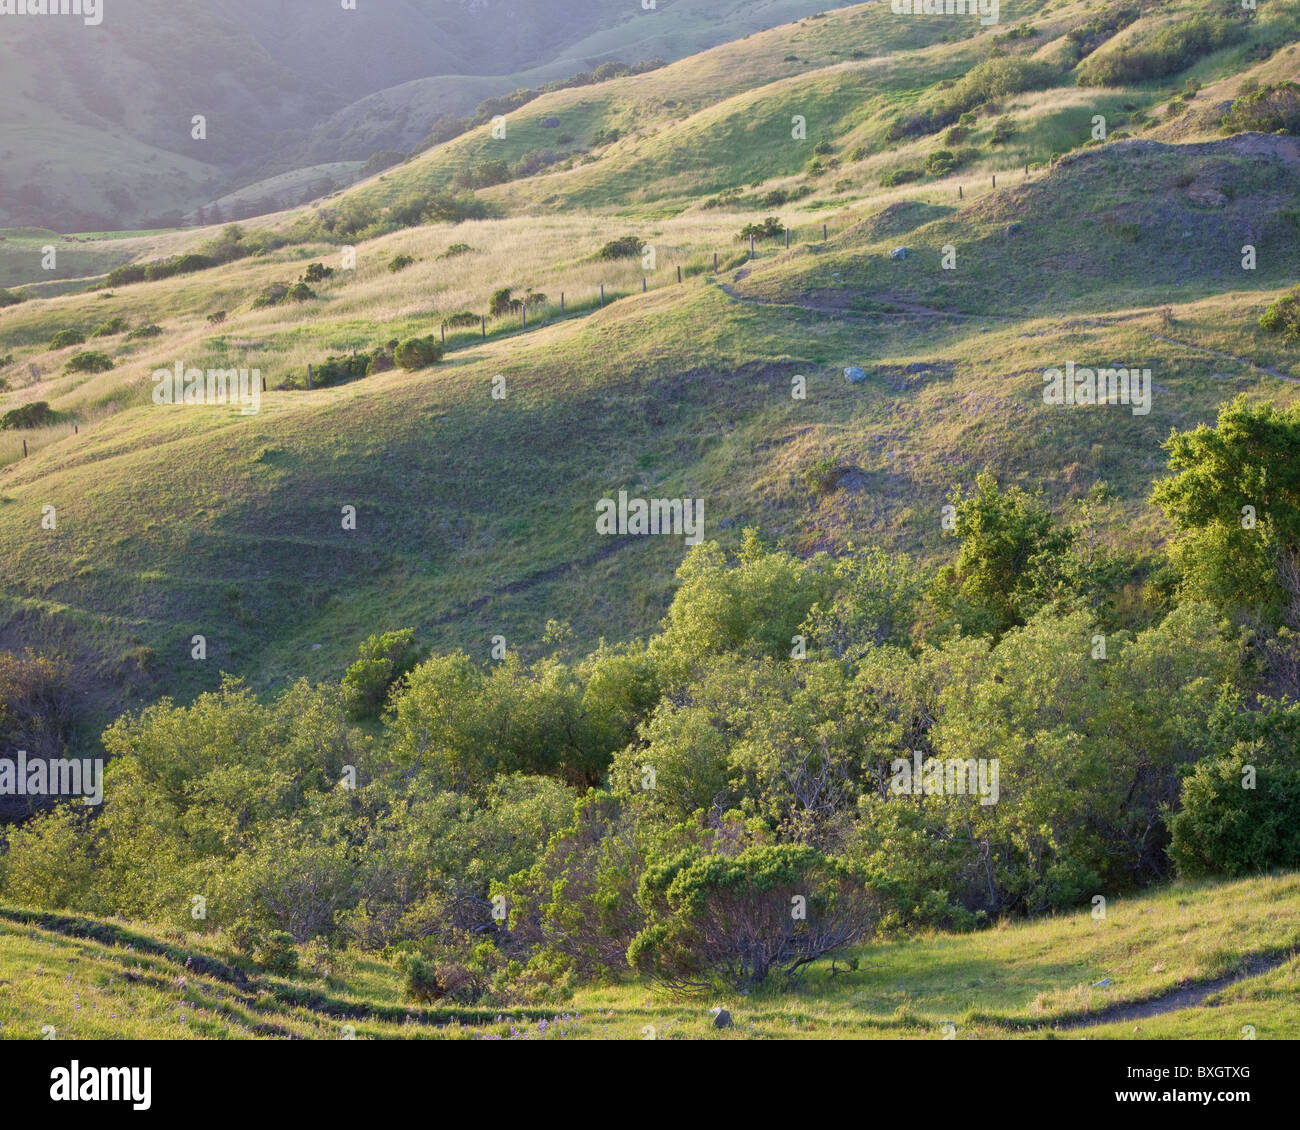 Coastal hills and pasture, El Sur Ranch, Big Sur country, central California coast, USA Stock Photo